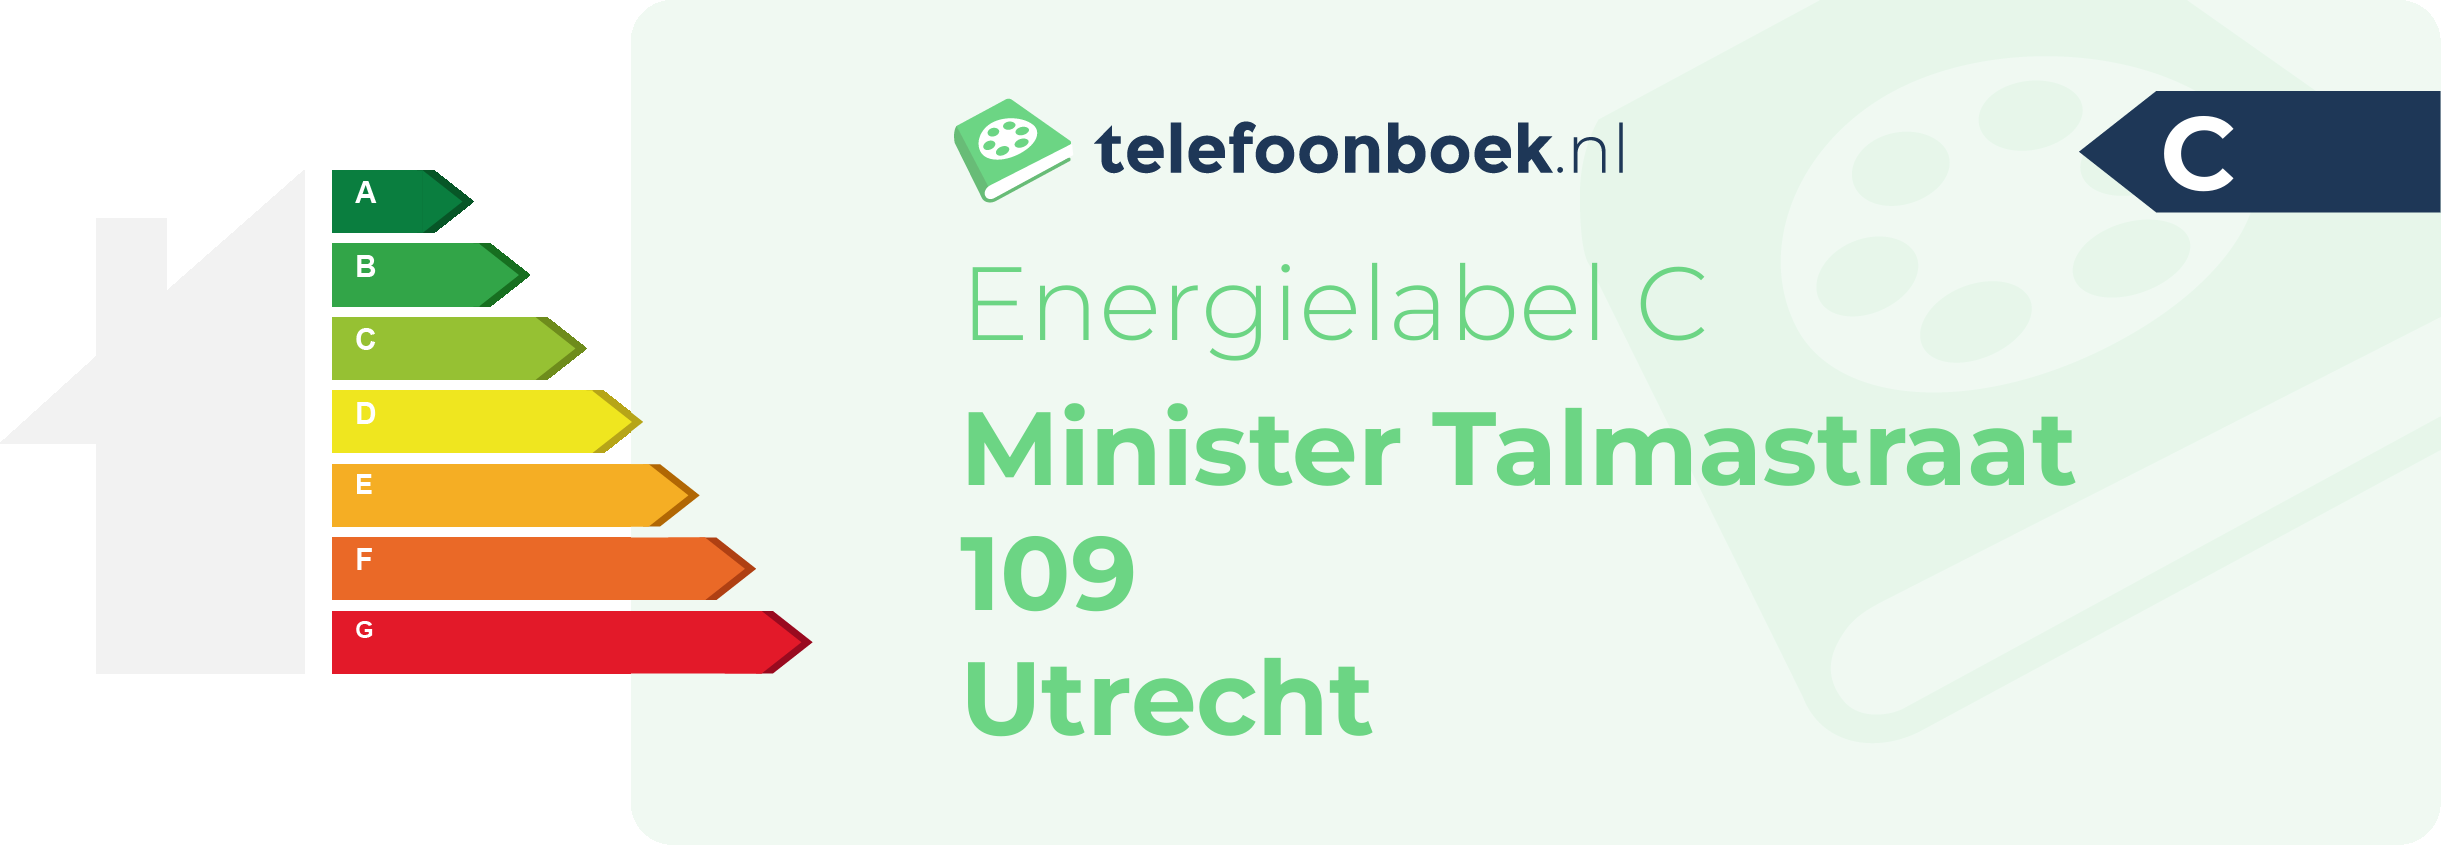 Energielabel Minister Talmastraat 109 Utrecht